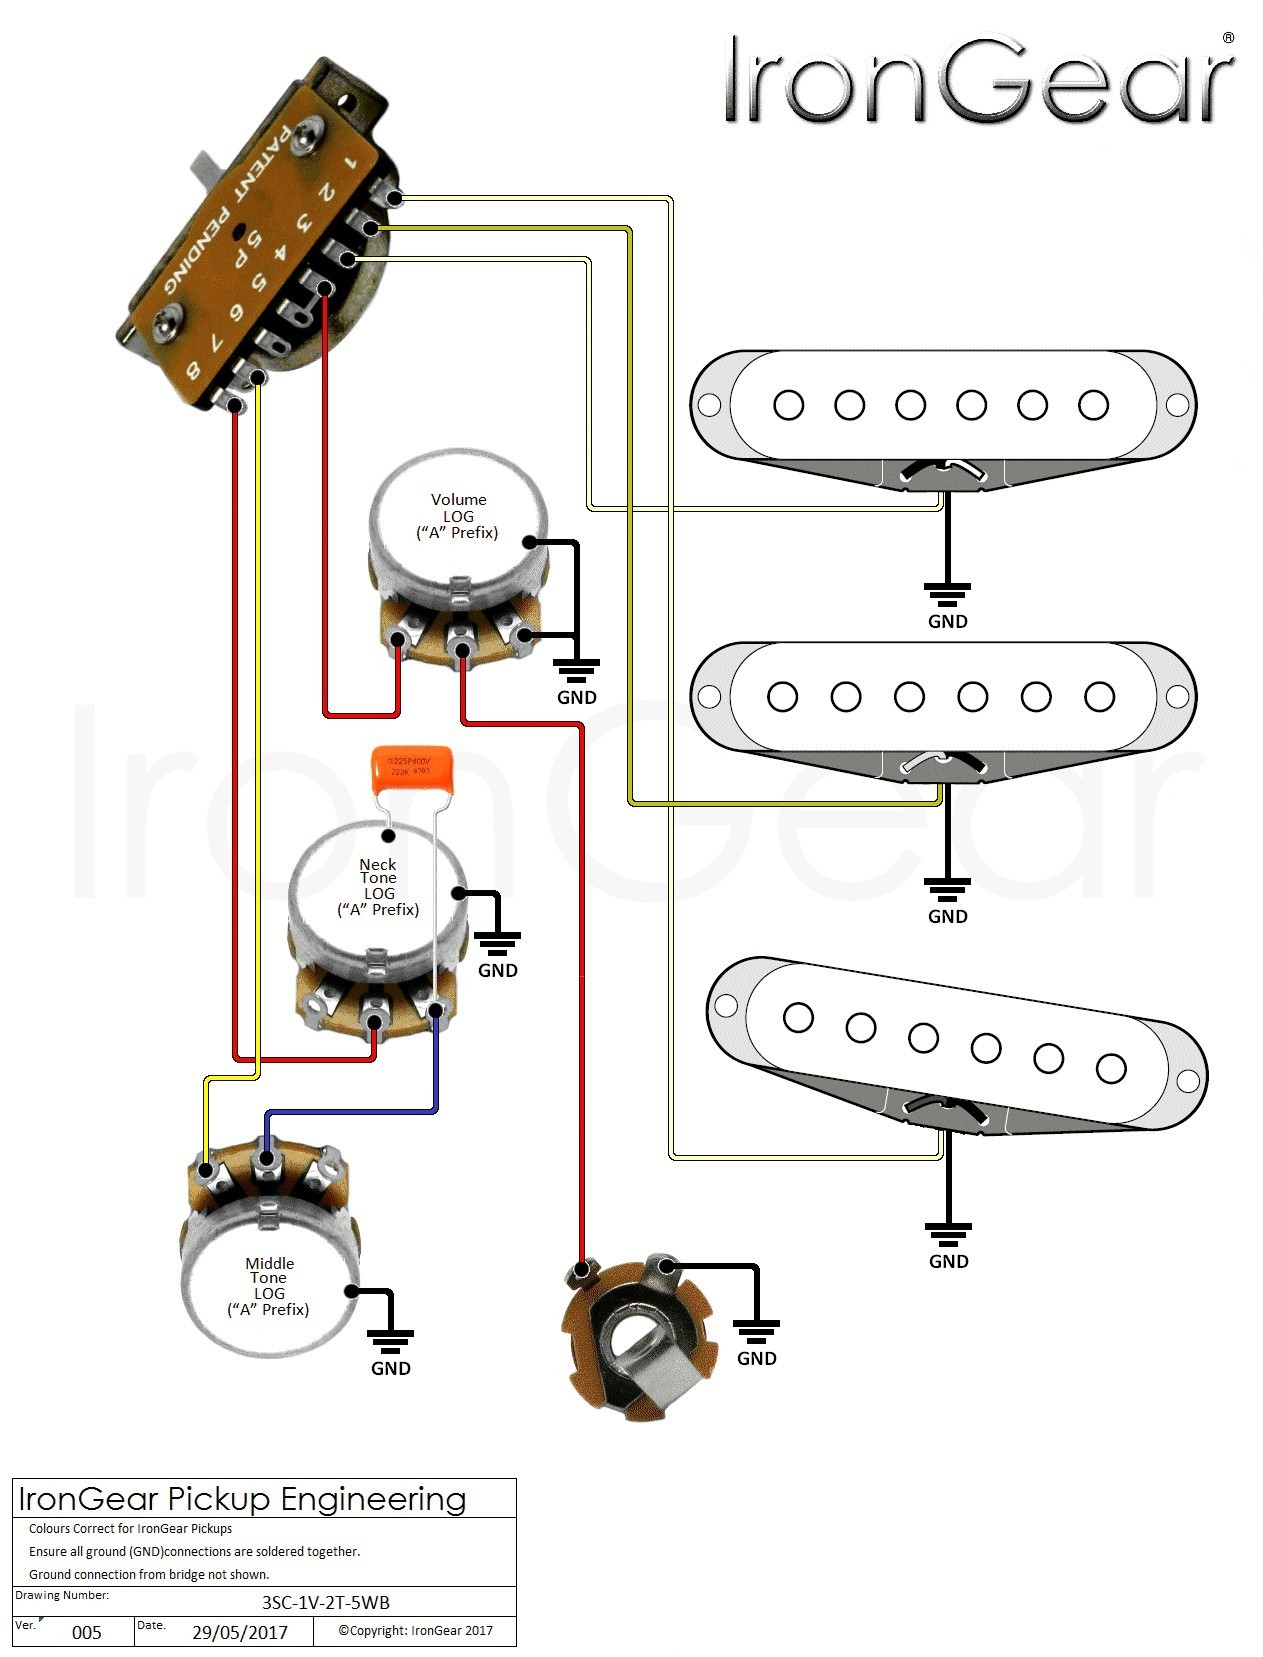 Guitar Wiring Diagram 2 Humbucker 1 Volume 1 Tone 1